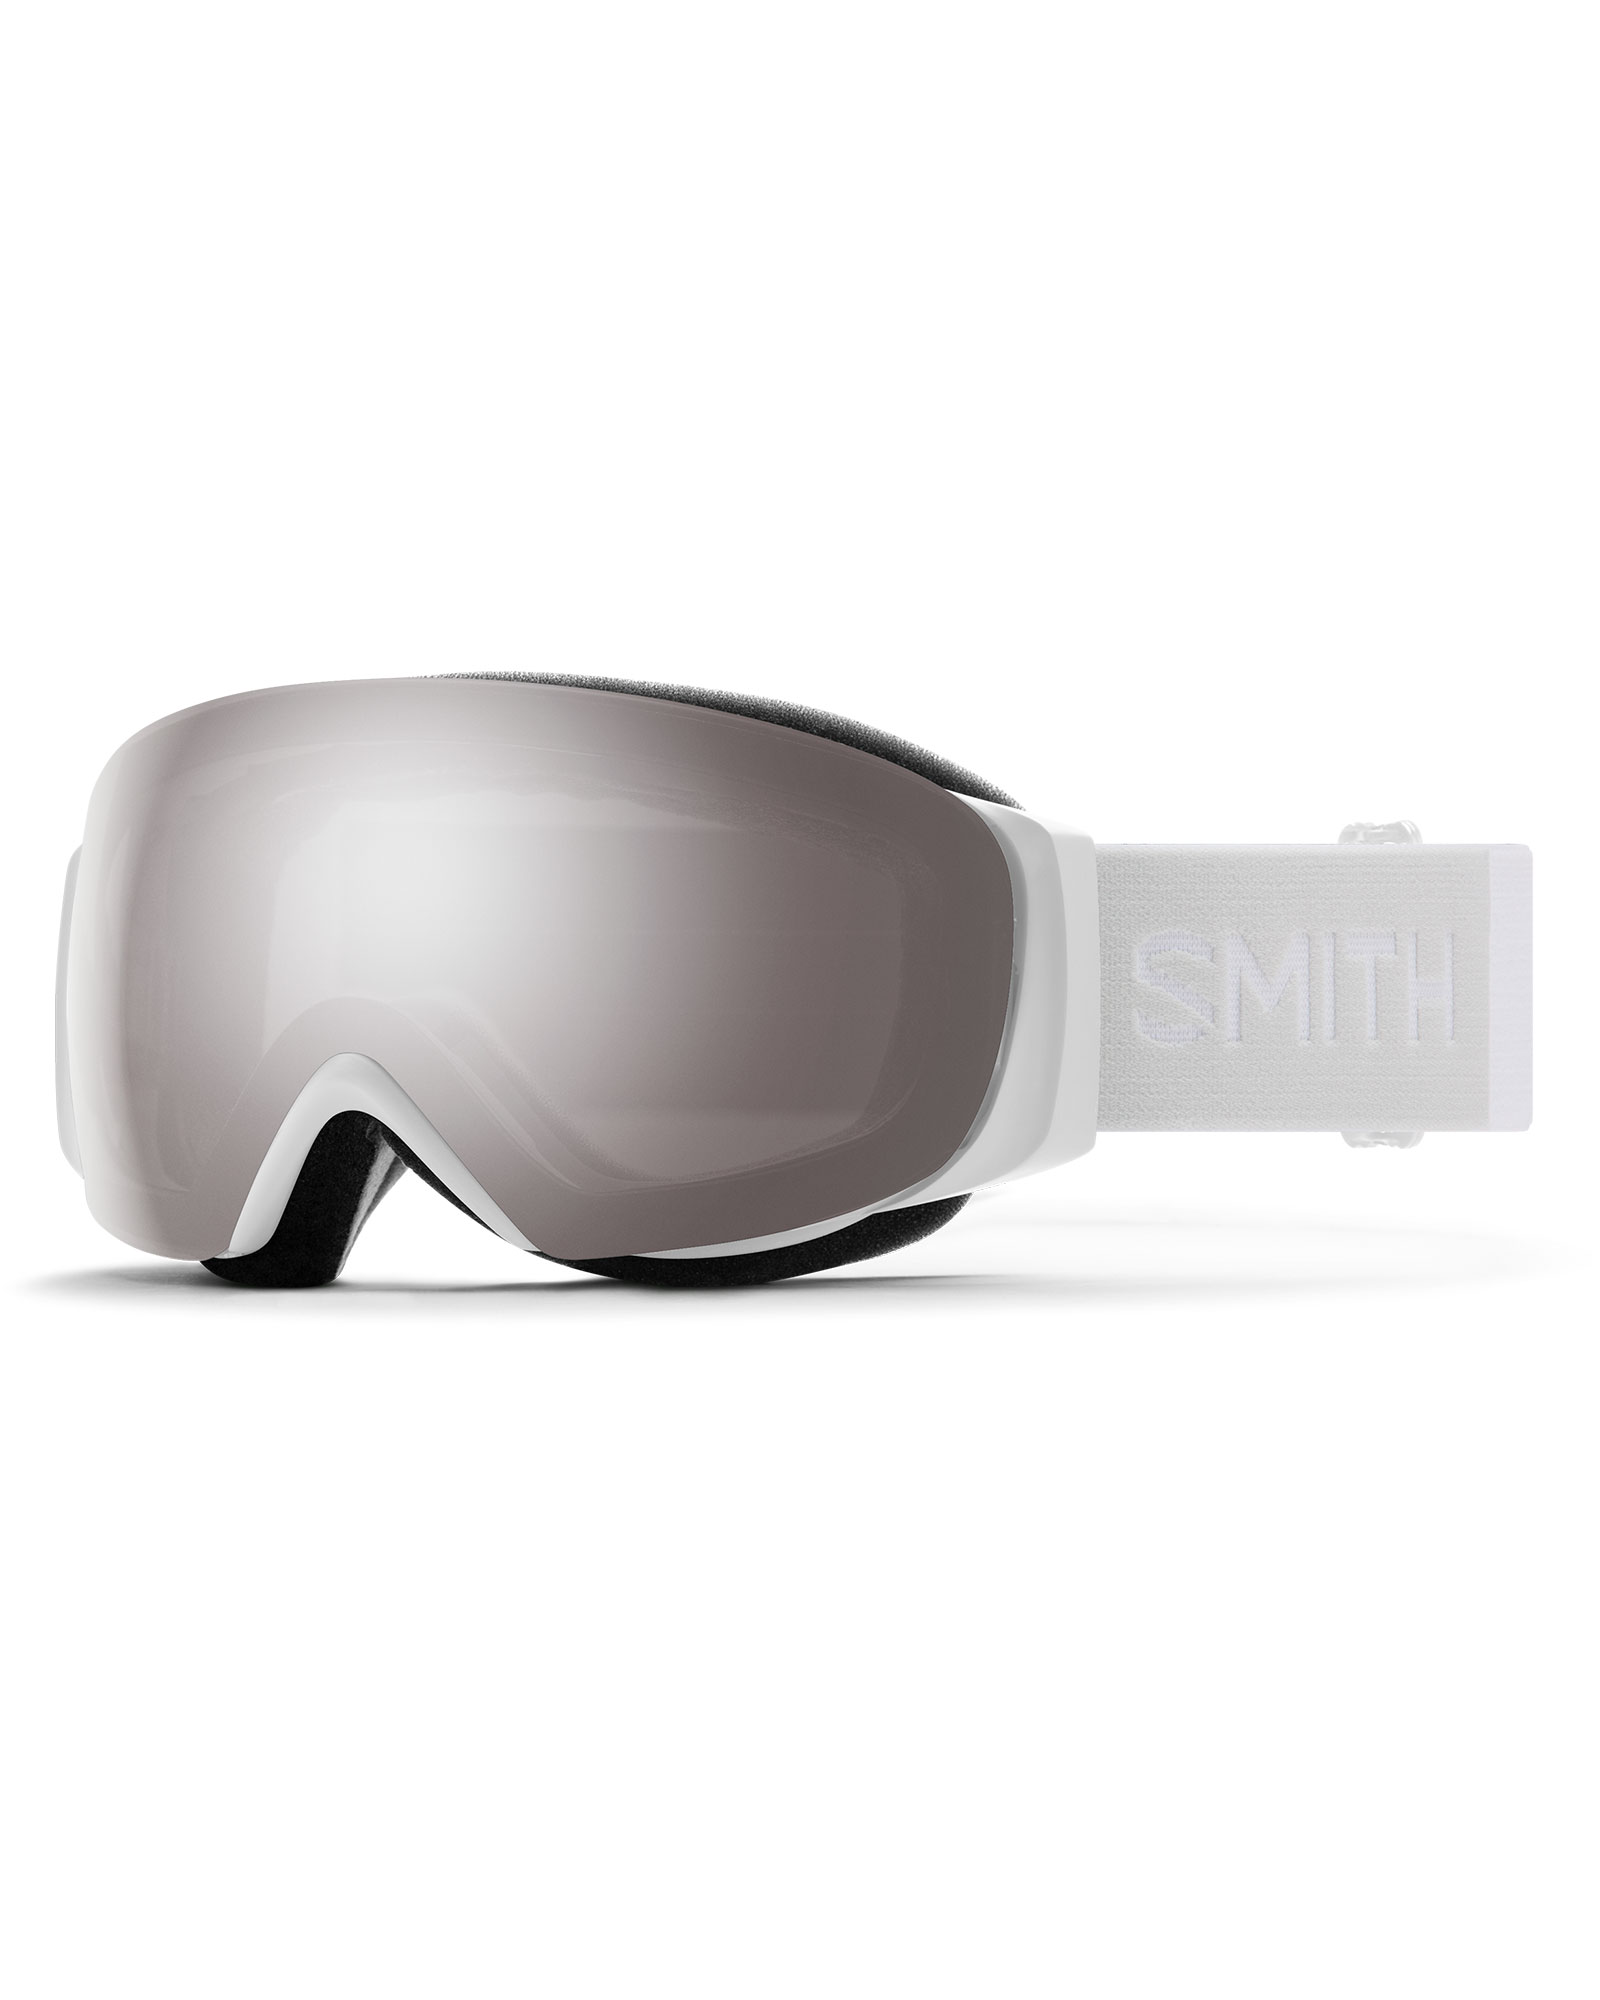 Smith I/O MAG S White Vapor / ChromaPop Sun Platinum Mirror + ChromaPop Storm Blue Sensor Mirror  Goggles - White Vapor